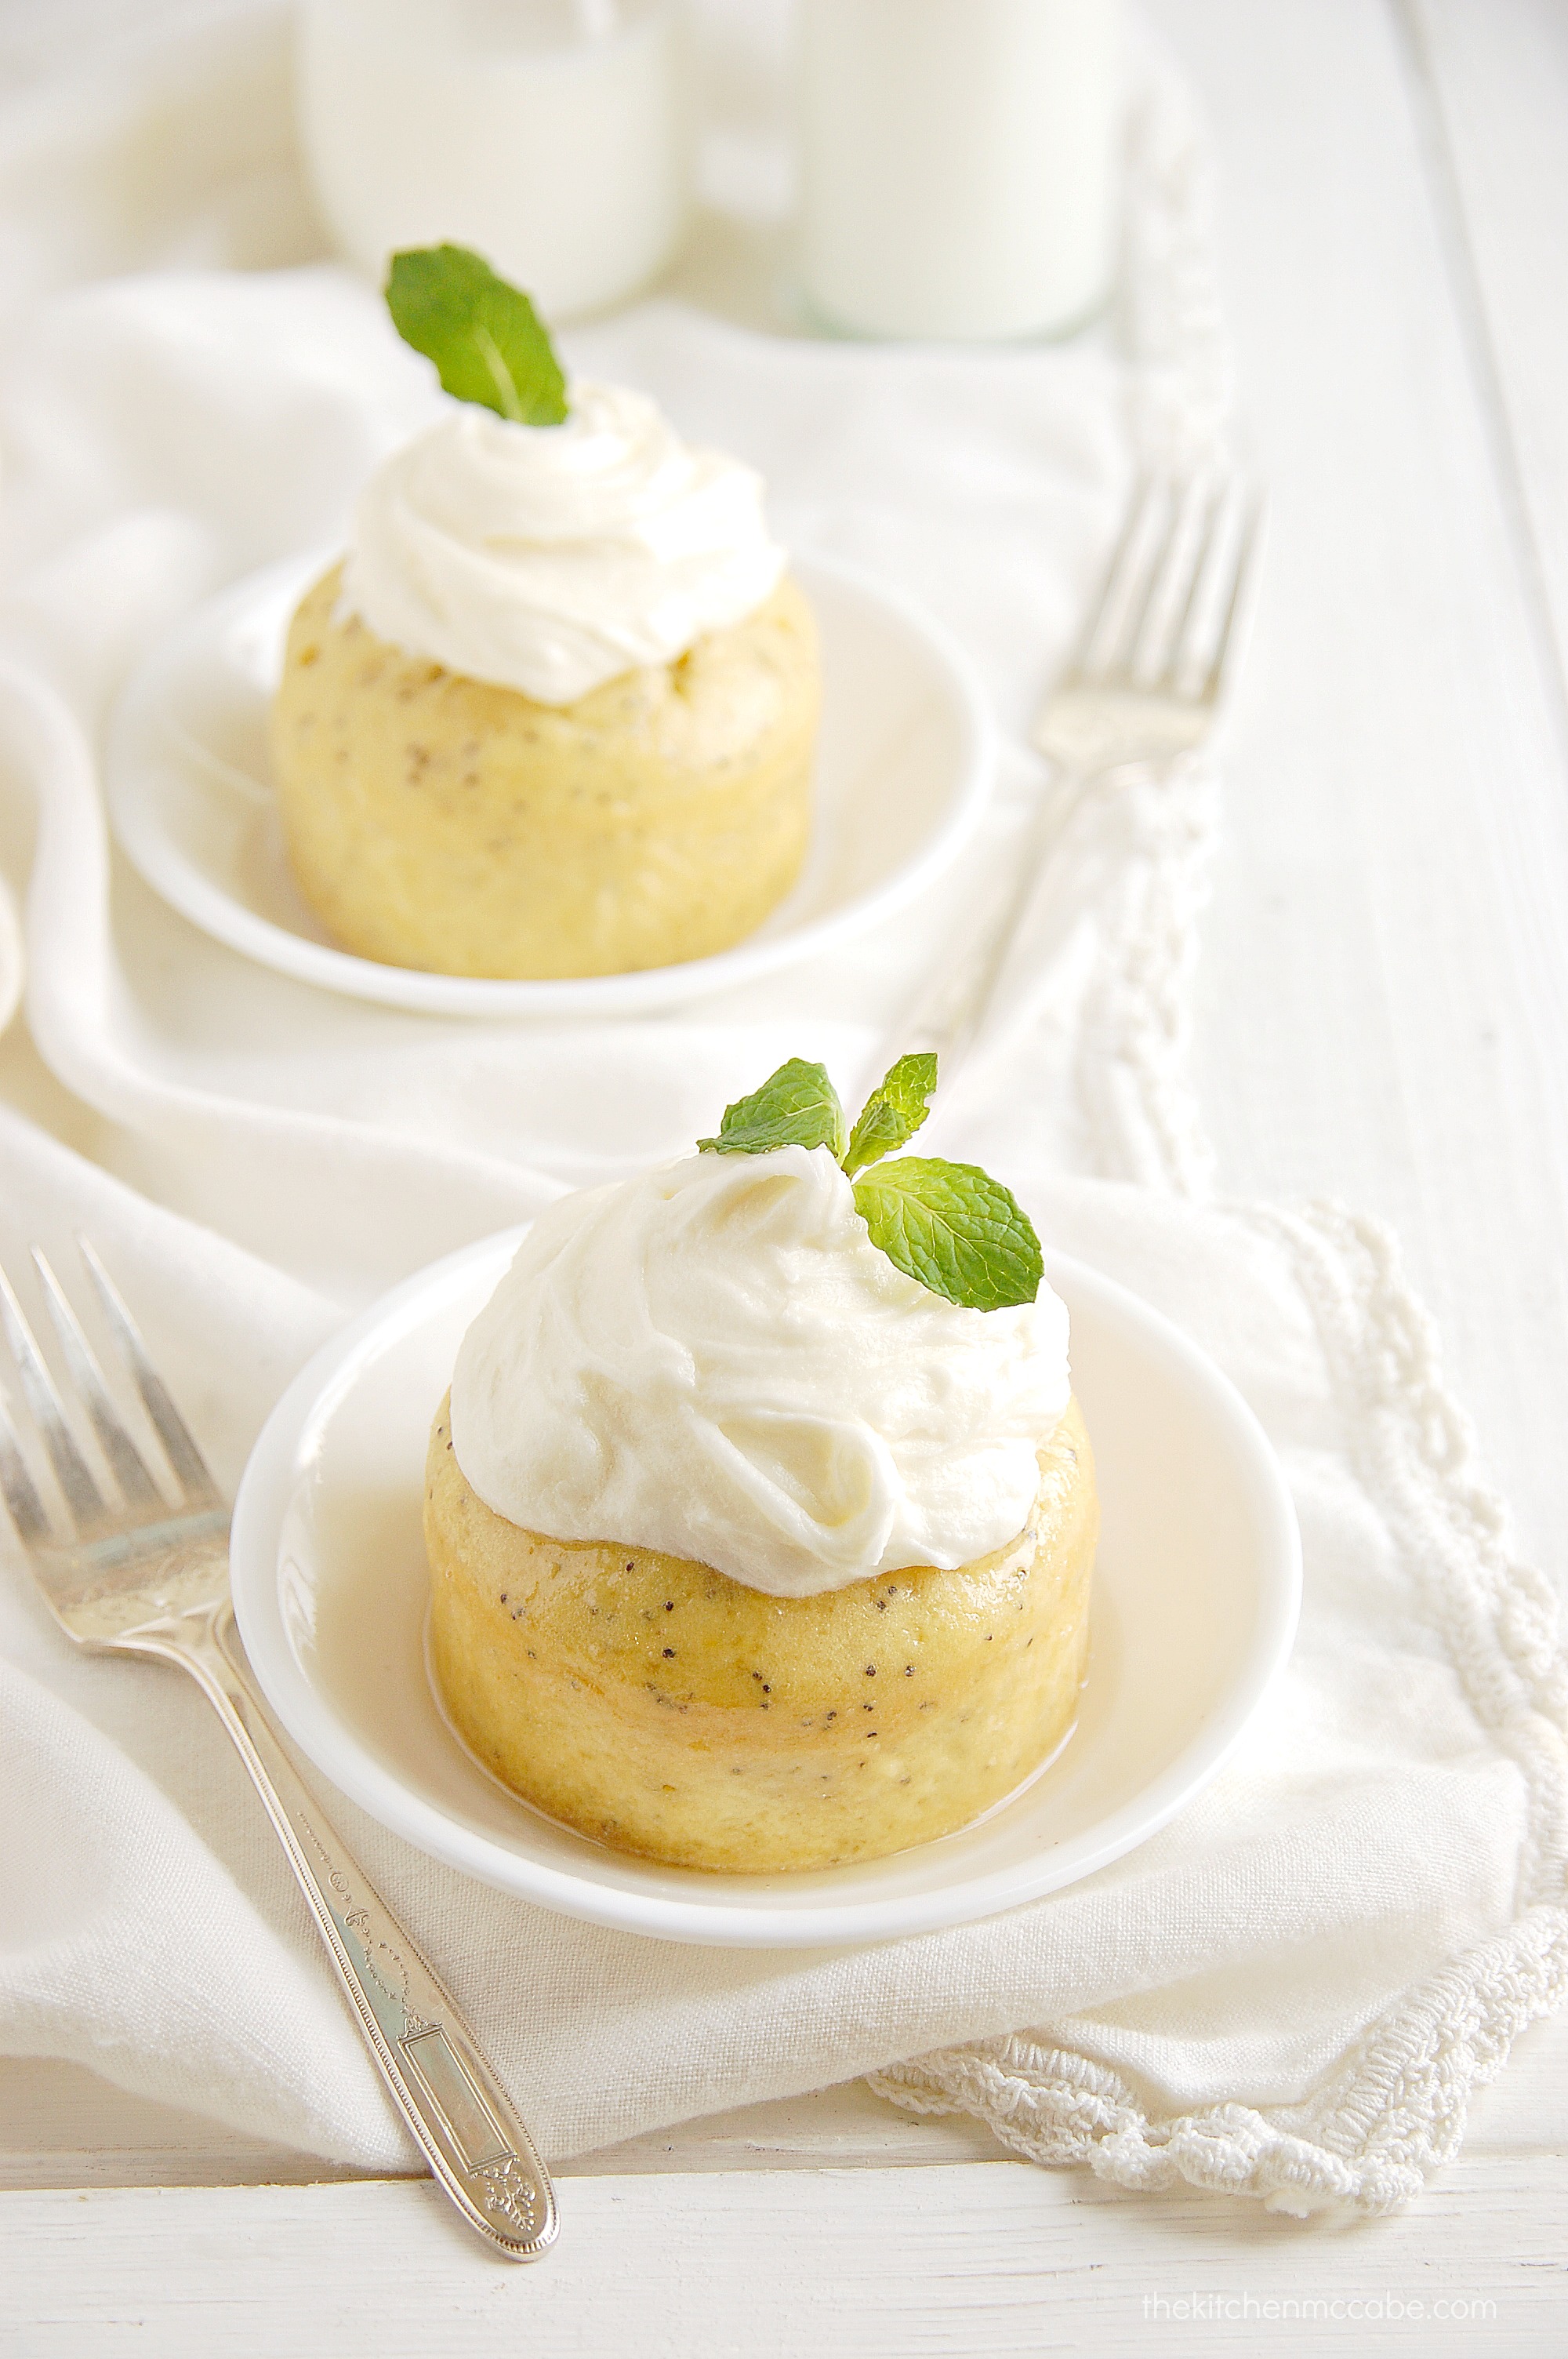 https://www.thekitchenmccabe.com/wp-content/uploads/2014/03/lemon-poppyseed-cakes-5.jpg